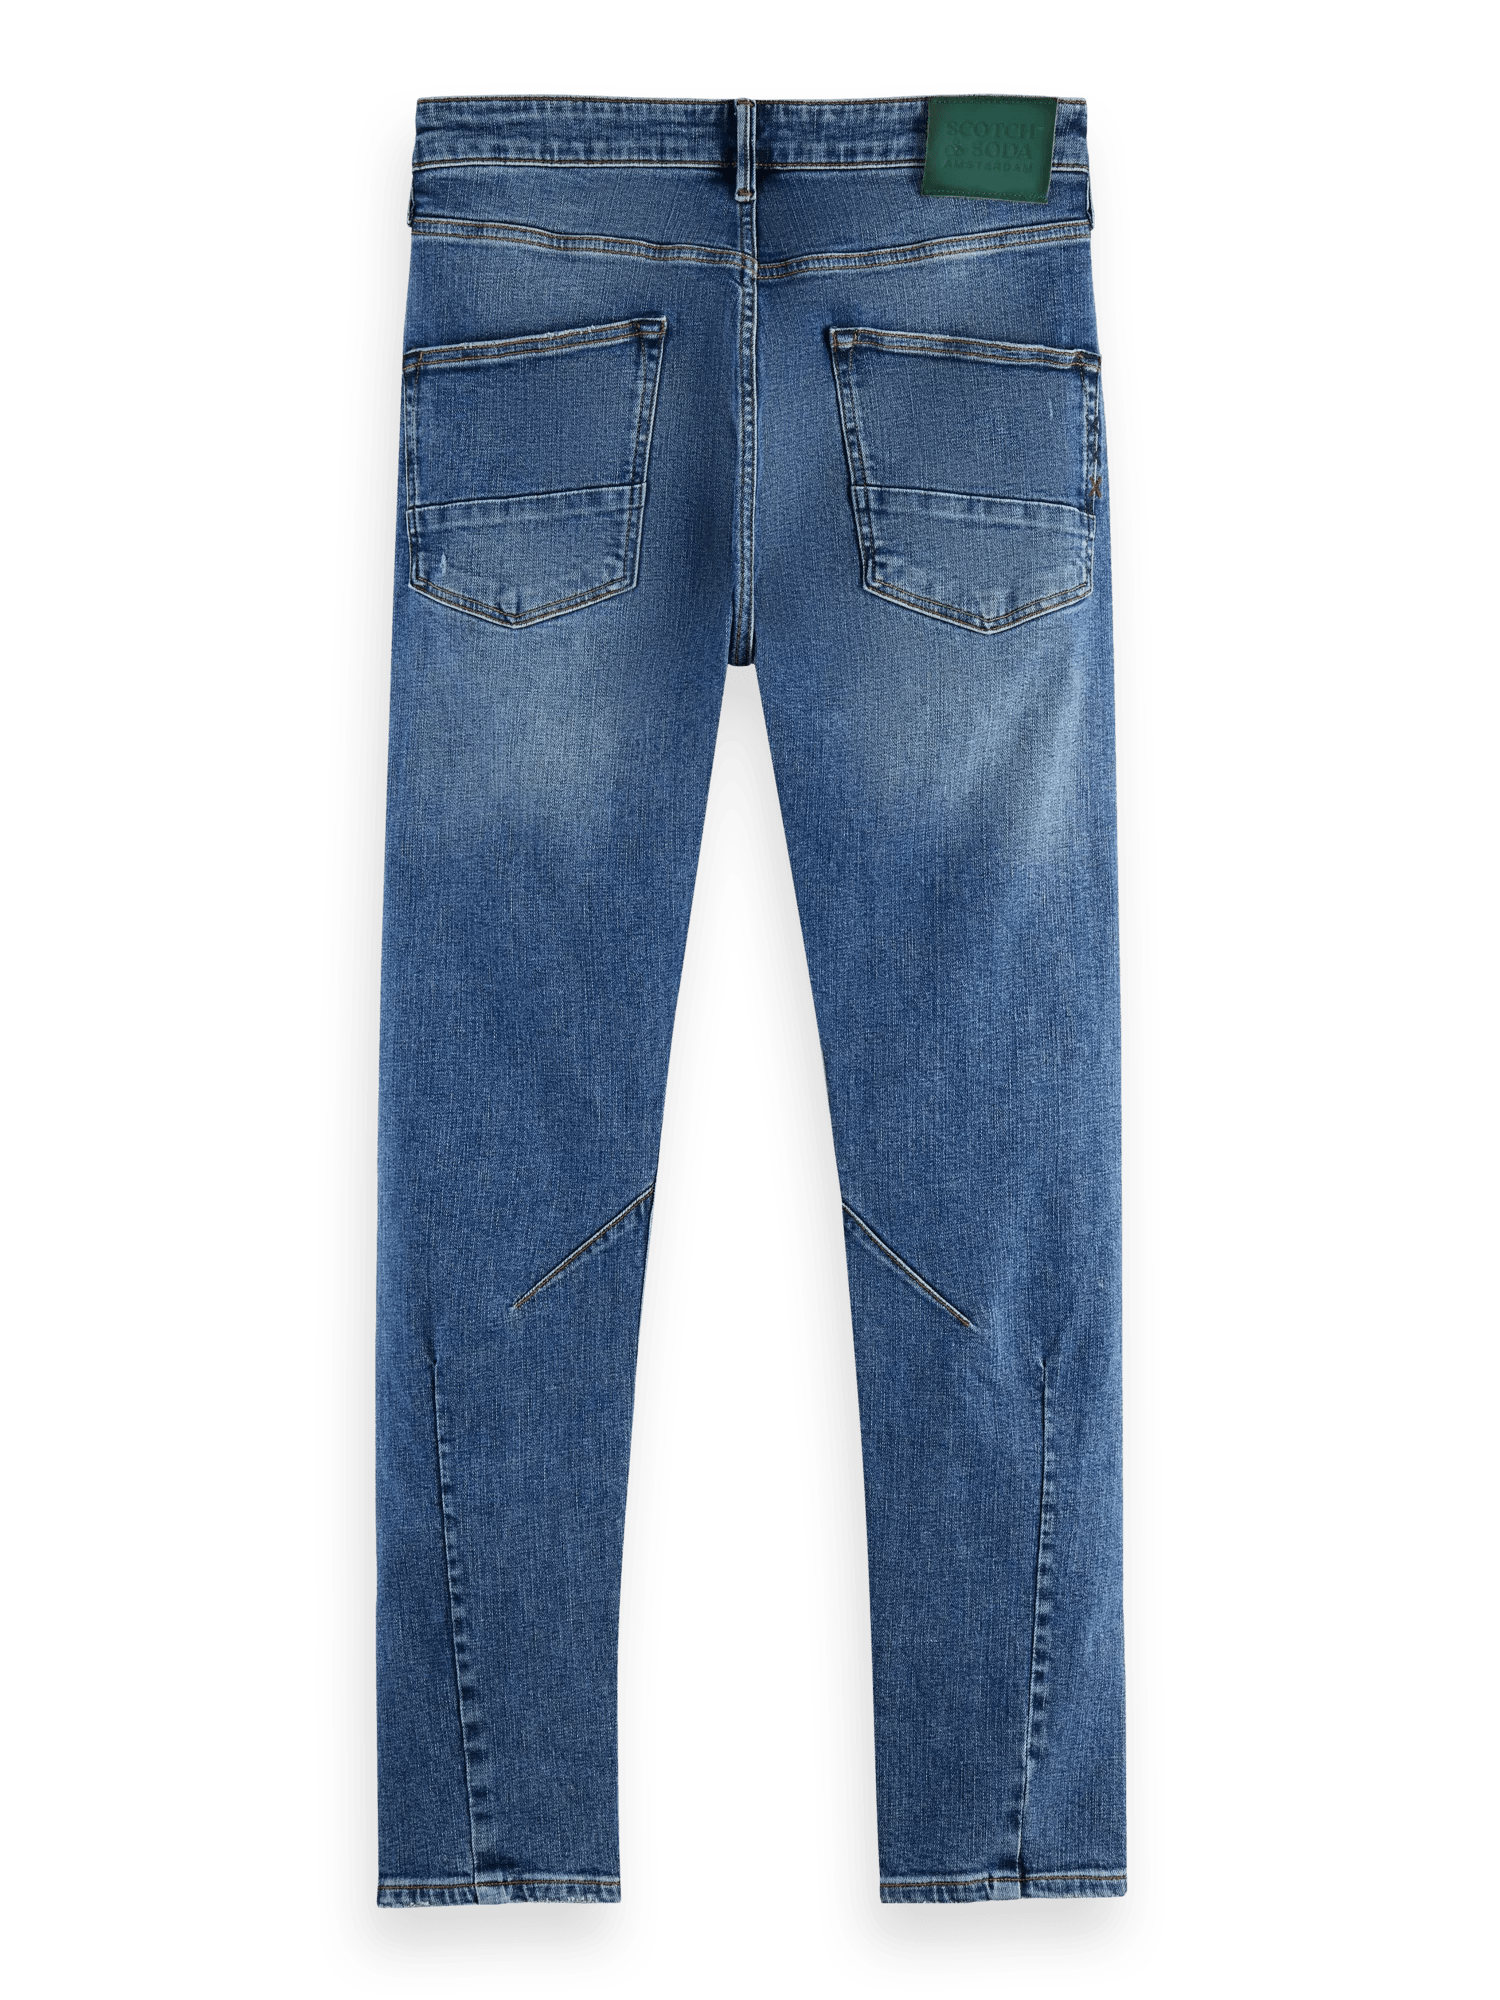 Scotch & Soda The Singel slim tapered-fit jeans BCK